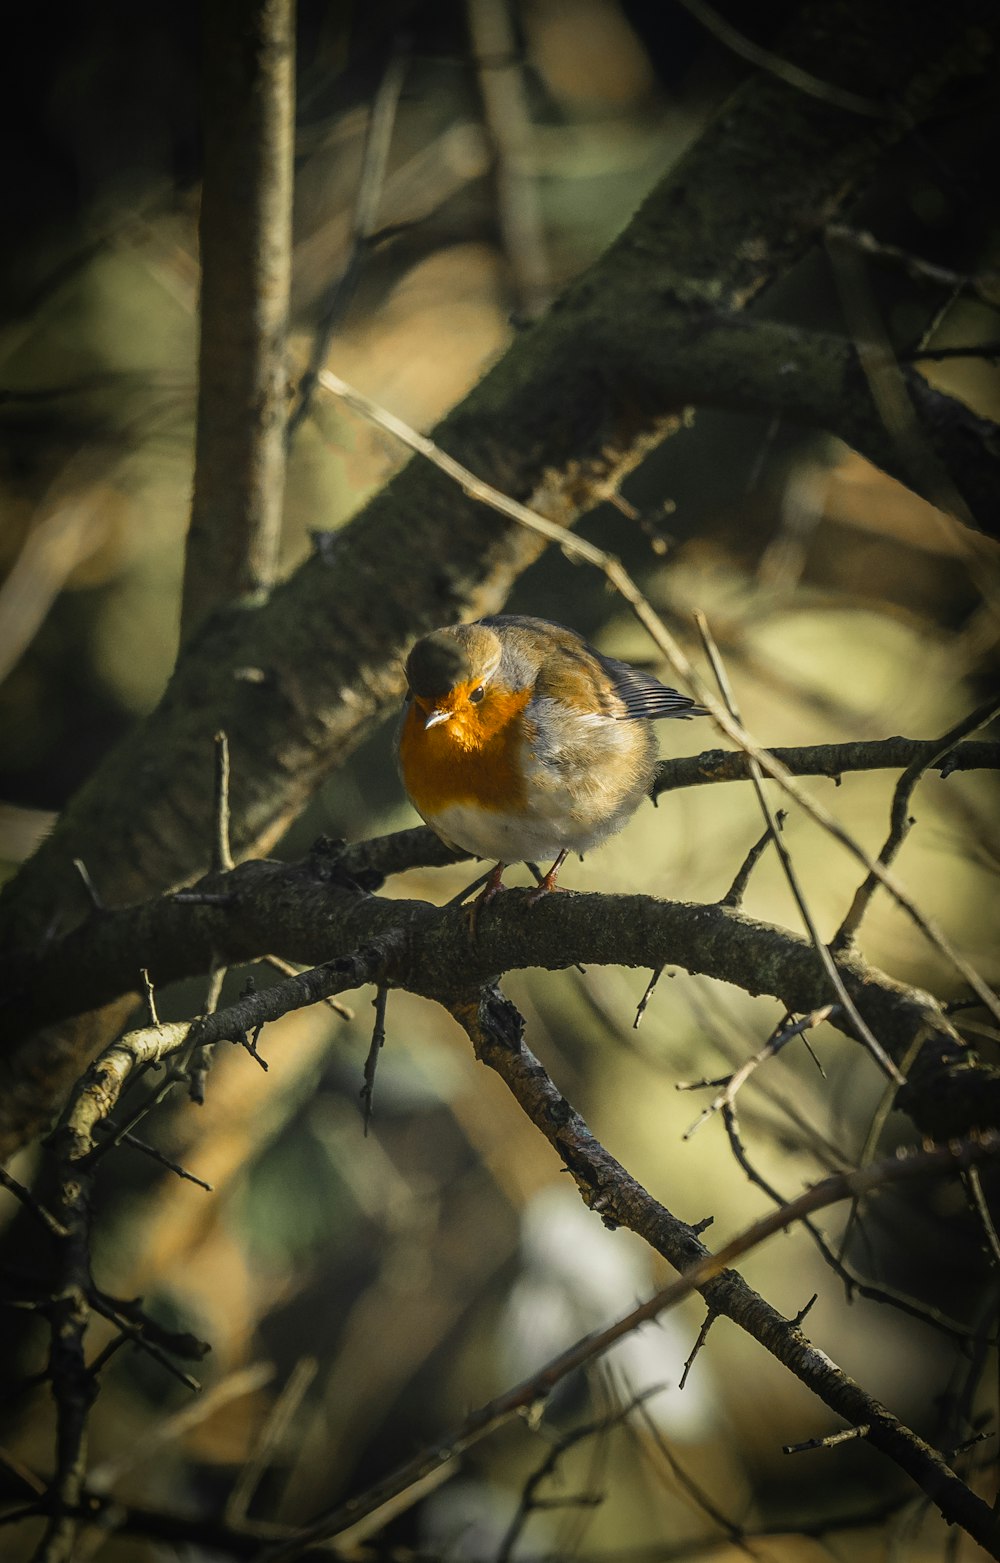 white and orange bird on tree branch during daytime